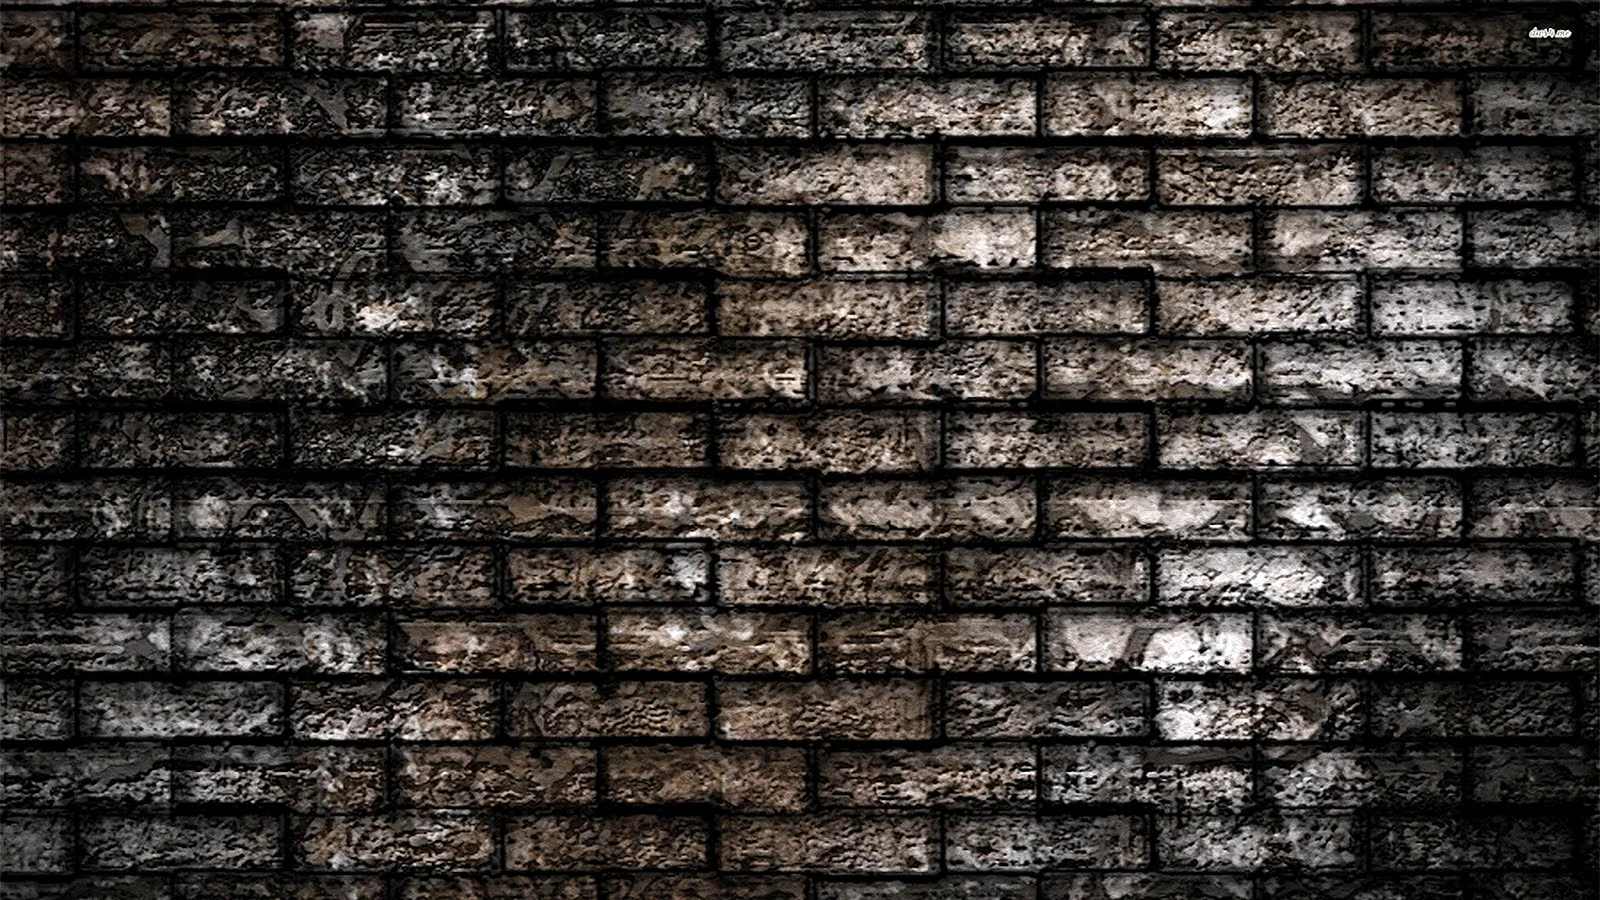 Brick Wall Wallpaper